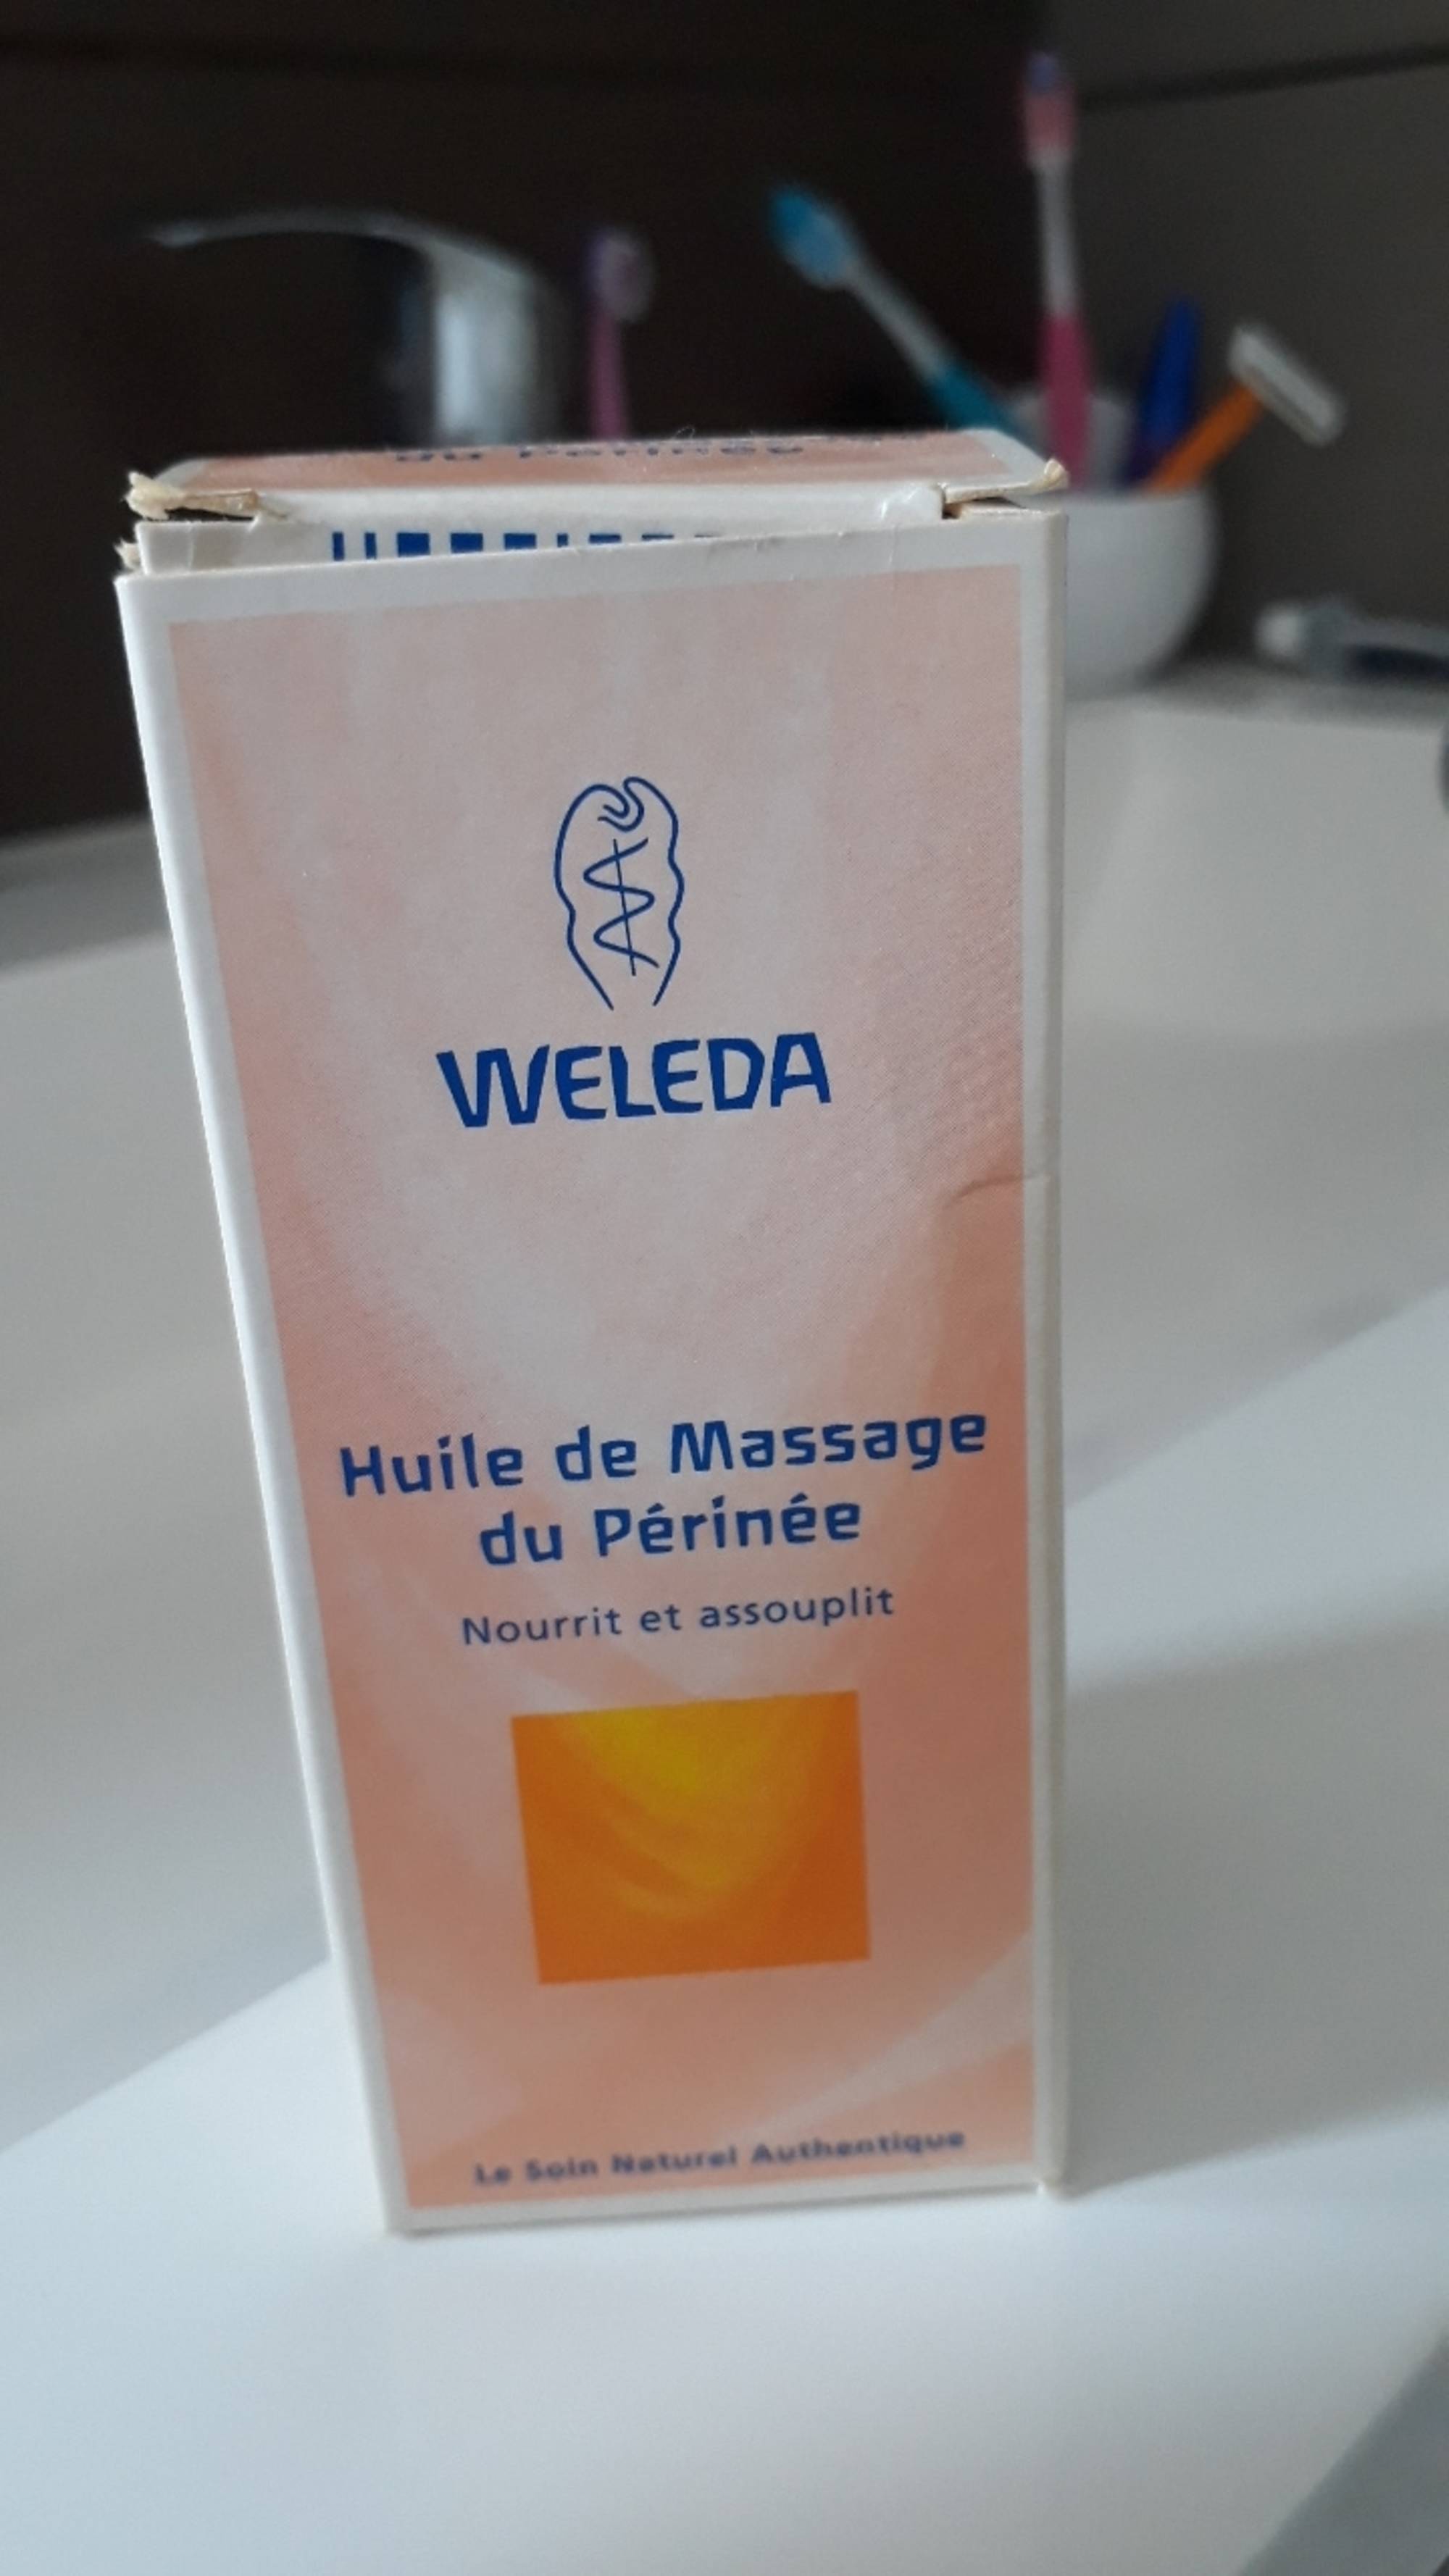 Huile de Massage du Périnée - Weleda